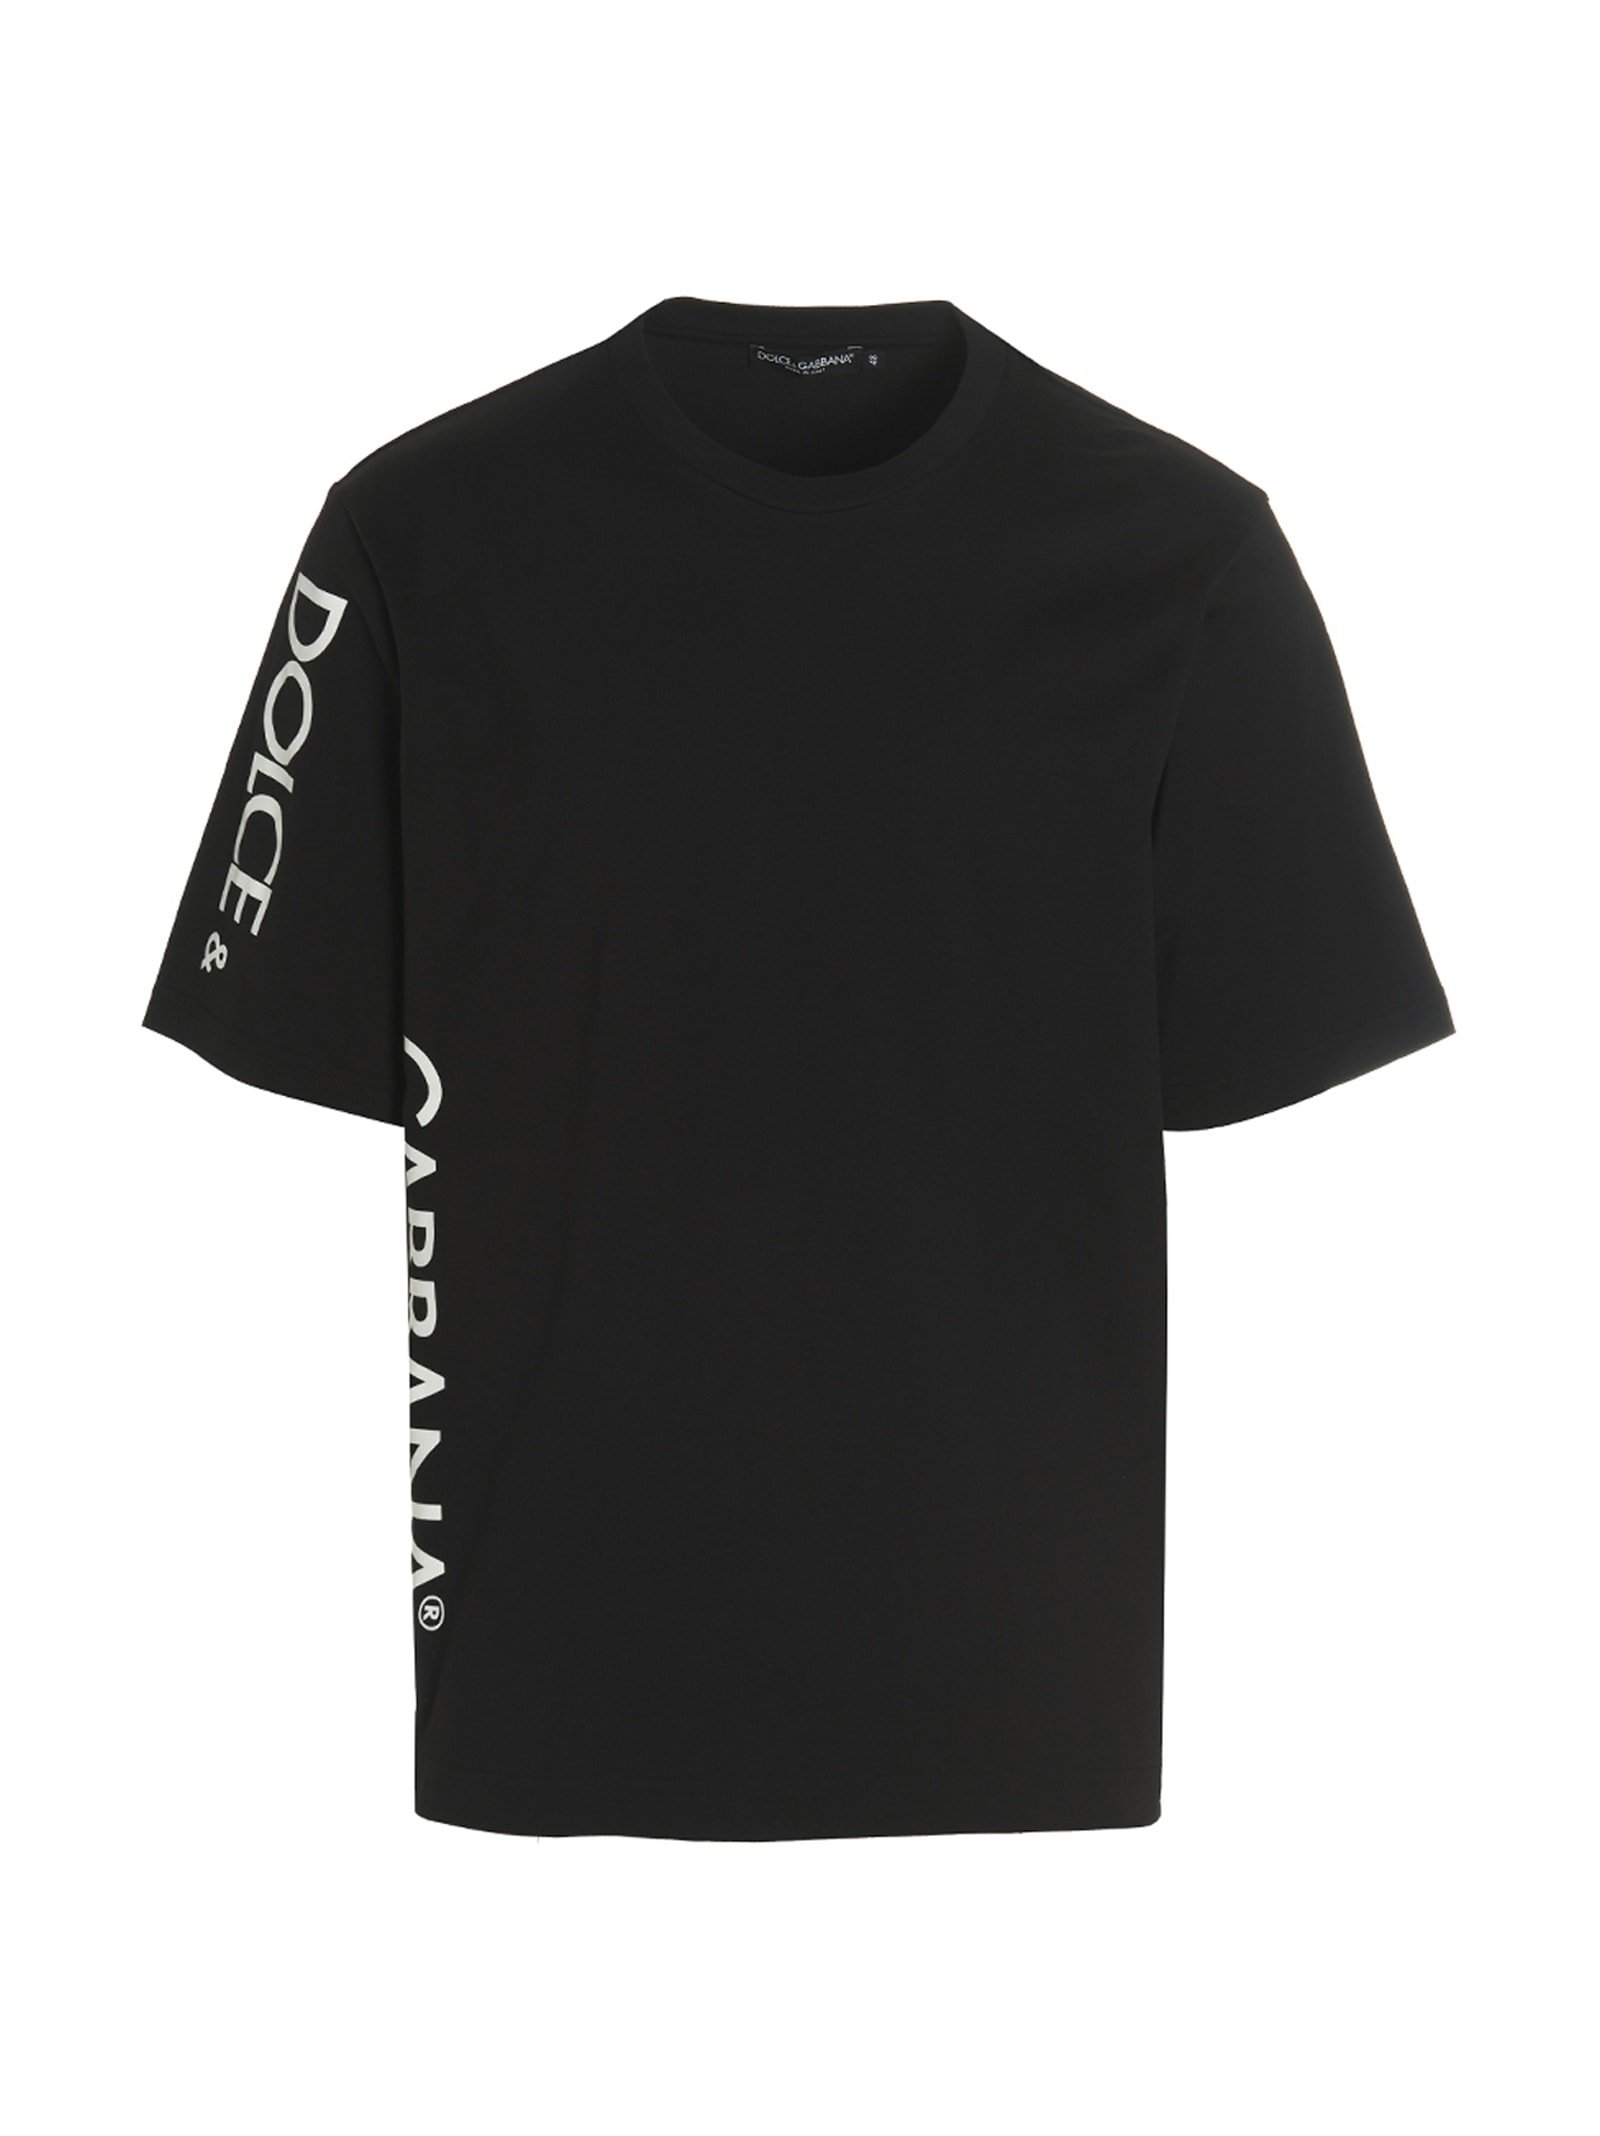 Dolce & Gabbana T-shirt black Sicily